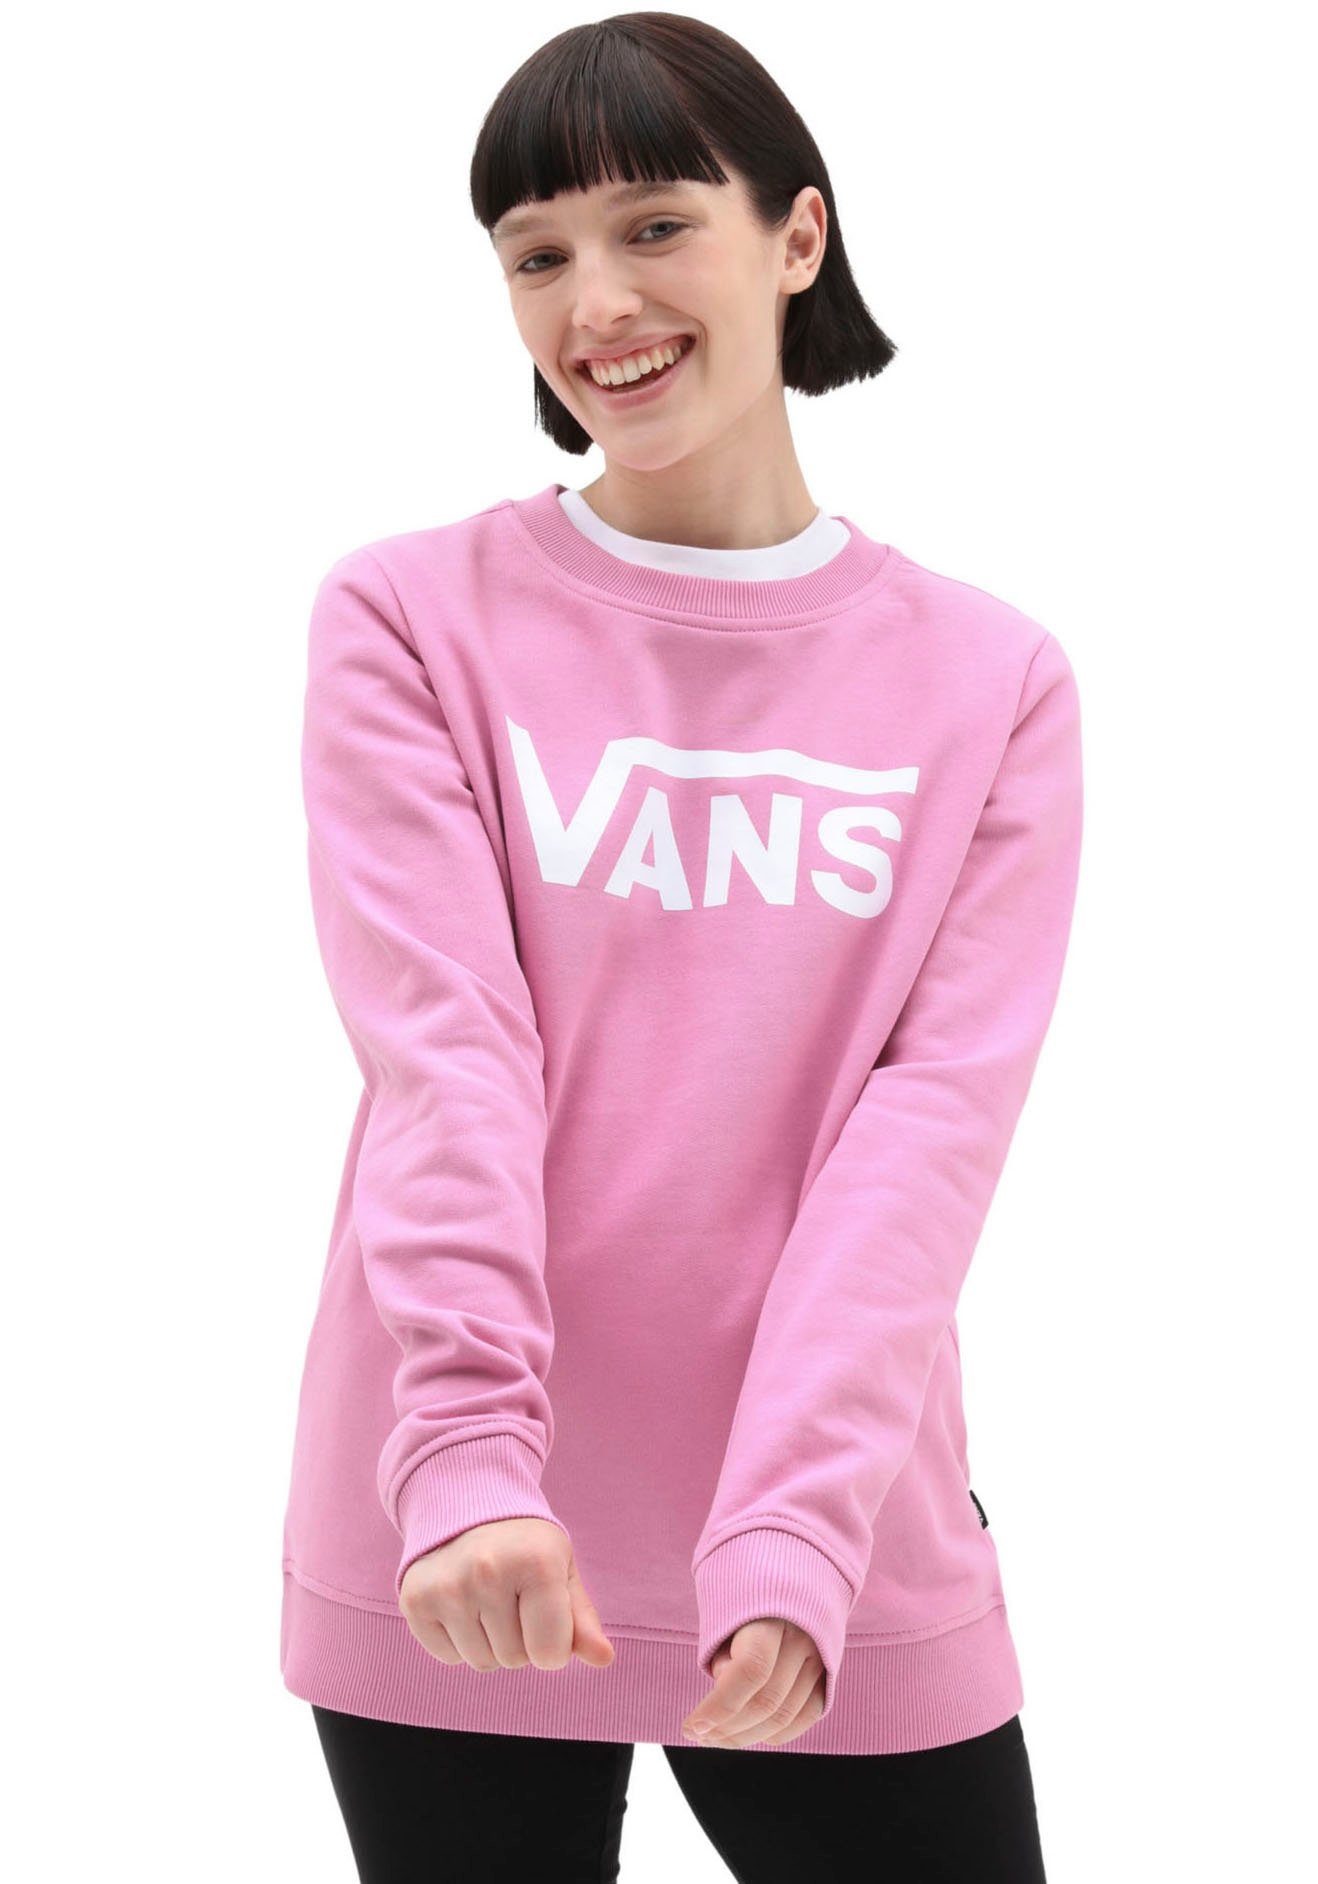 Vans Sweatshirt Damen online kaufen | OTTO